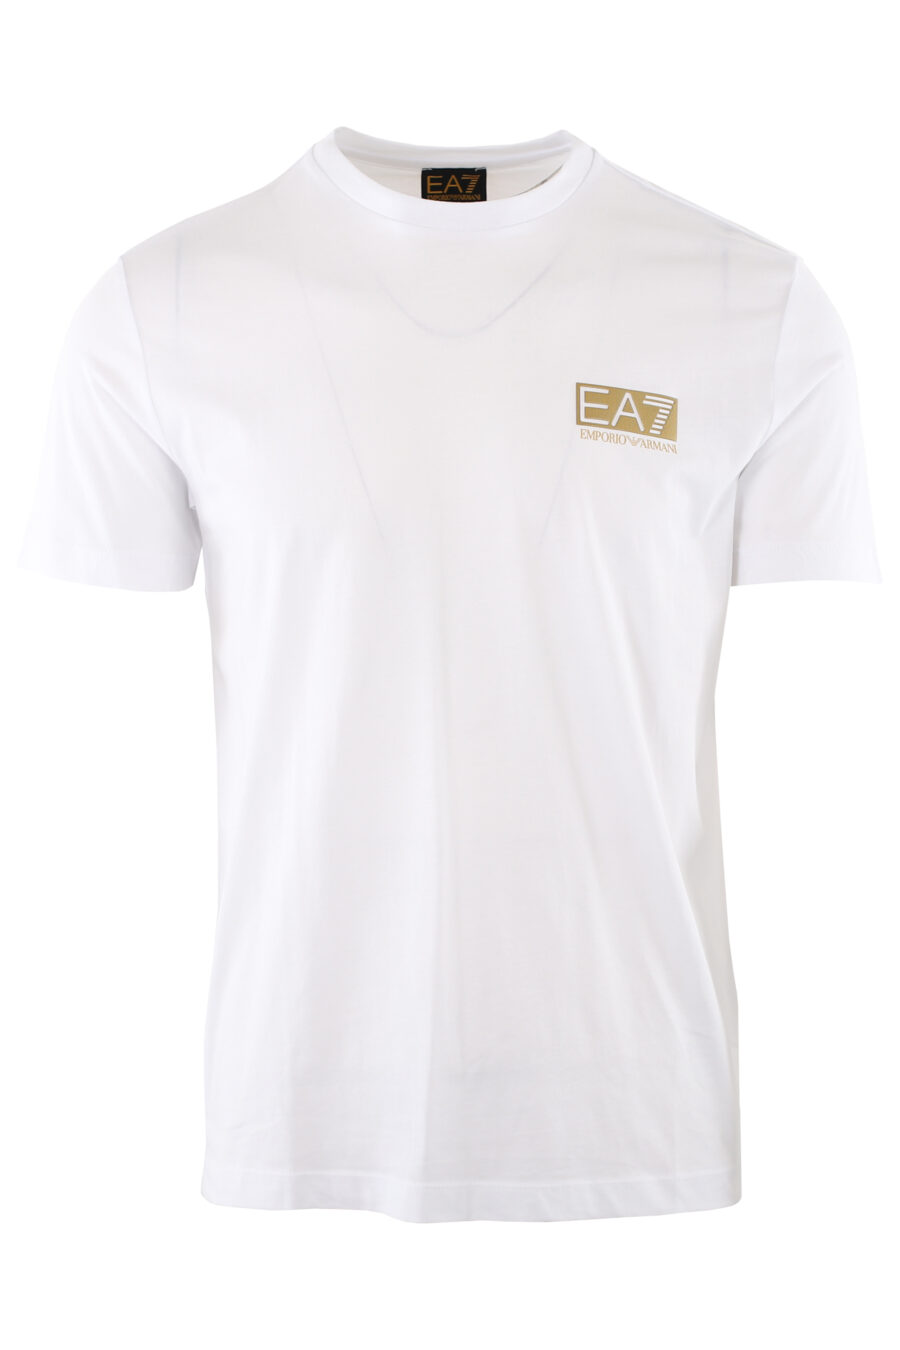 Camiseta blanca con logo dorado "lux identity" - IMG 7416